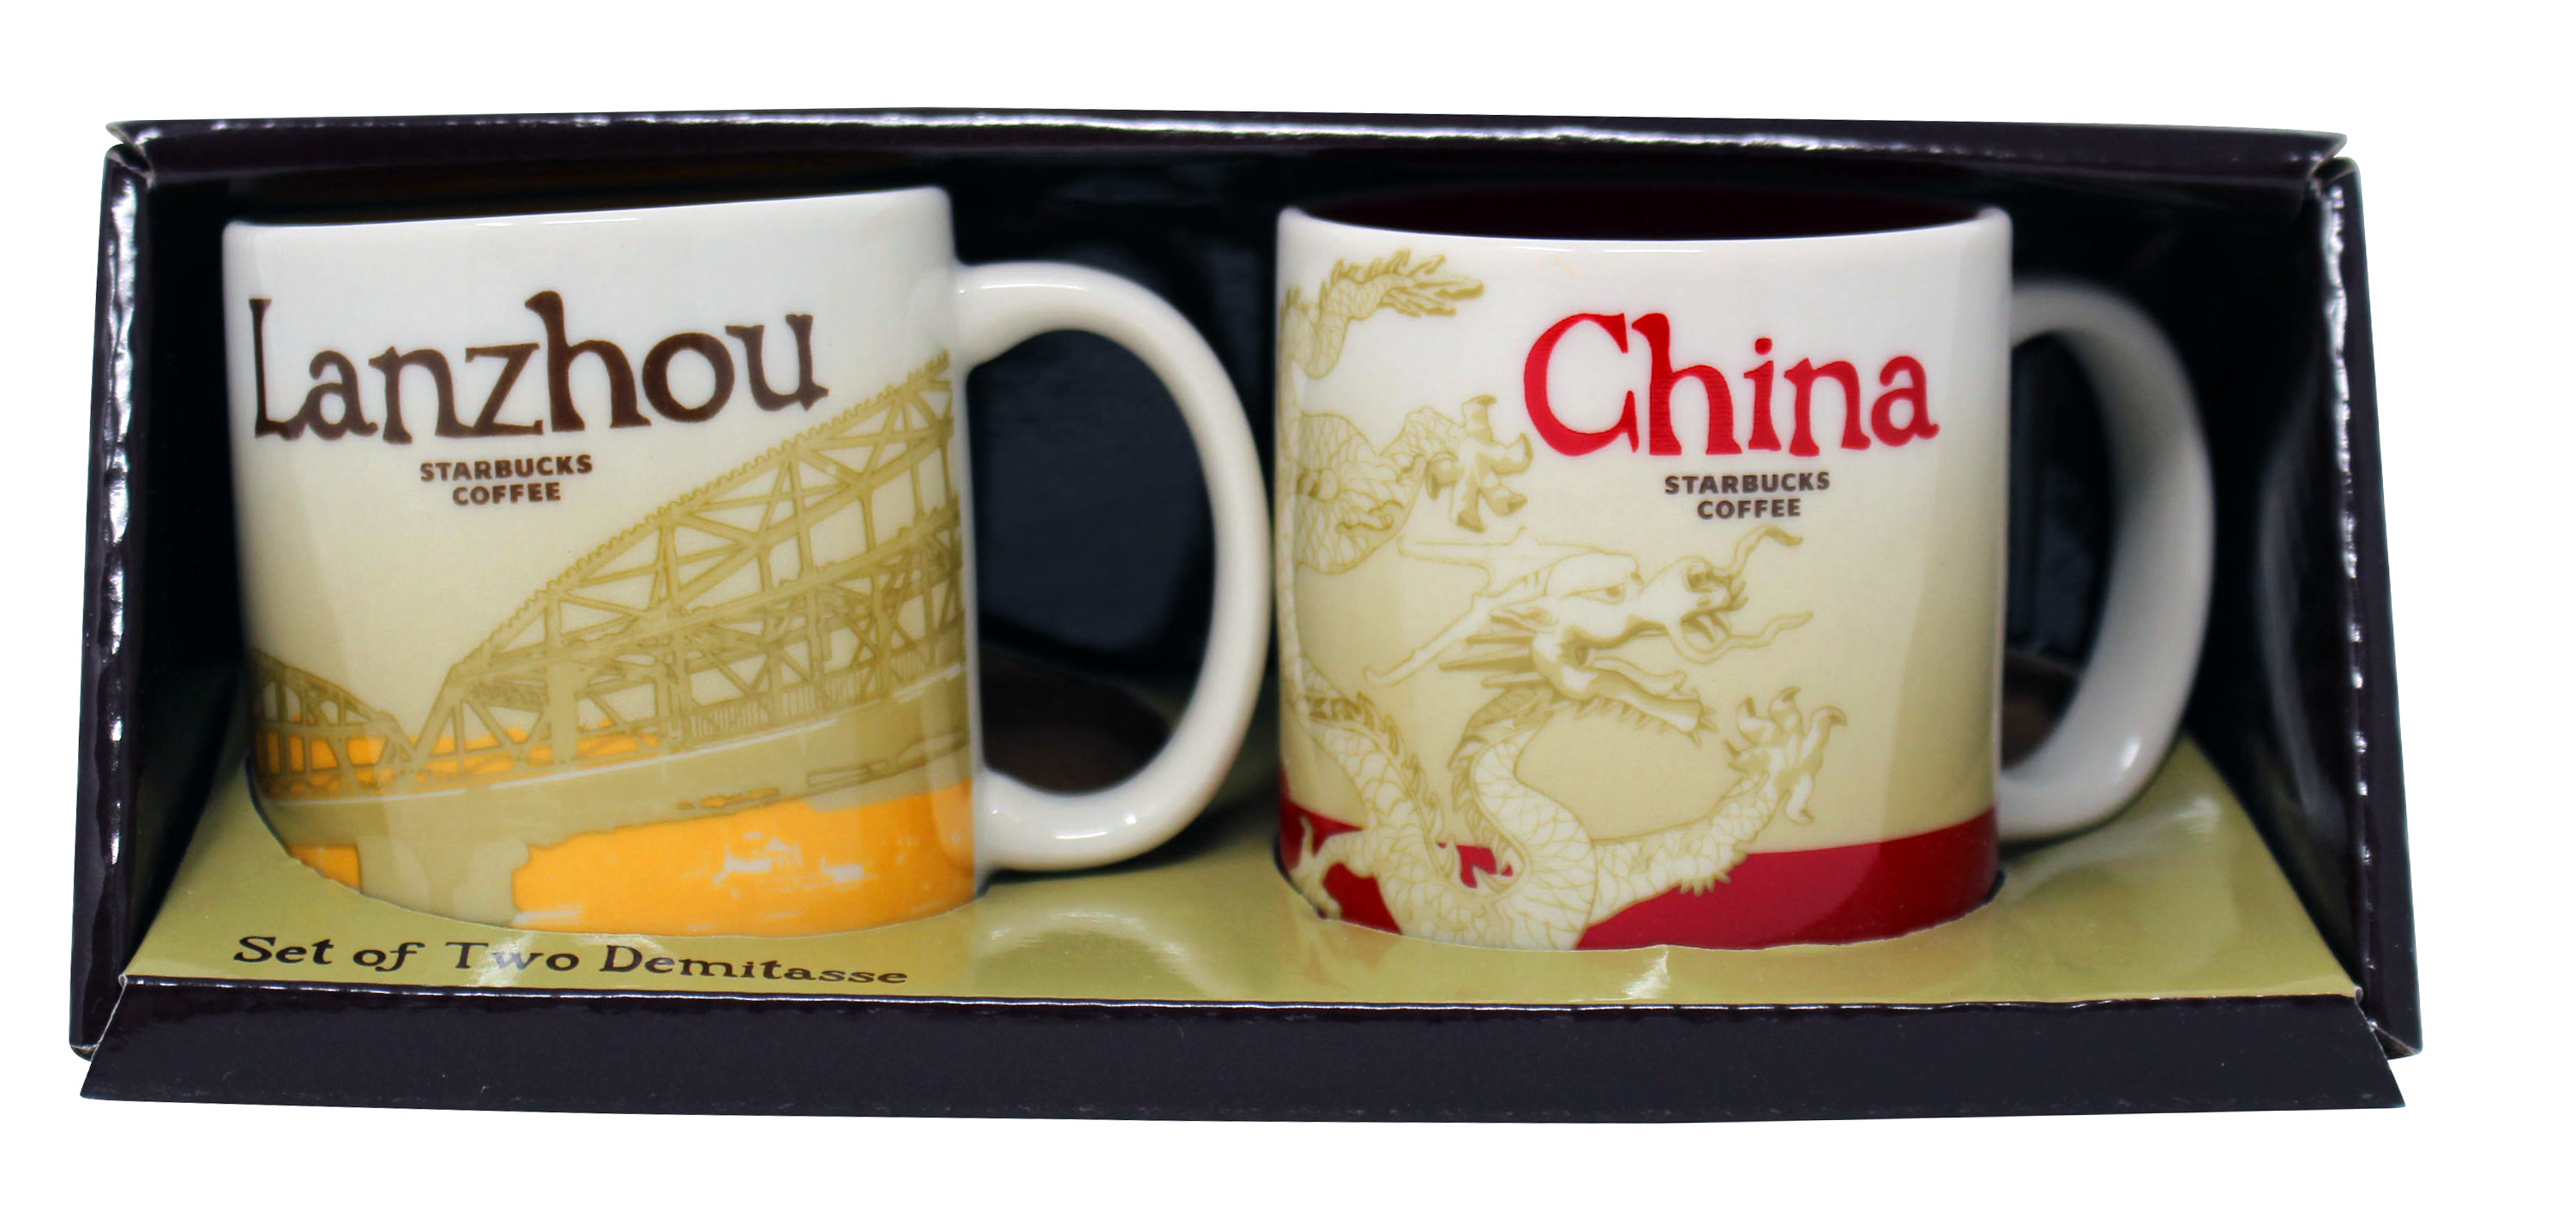 Starbucks Global Icon Series Lanzhou and China Demitasse Mugs, 3 Oz (2 Pack)